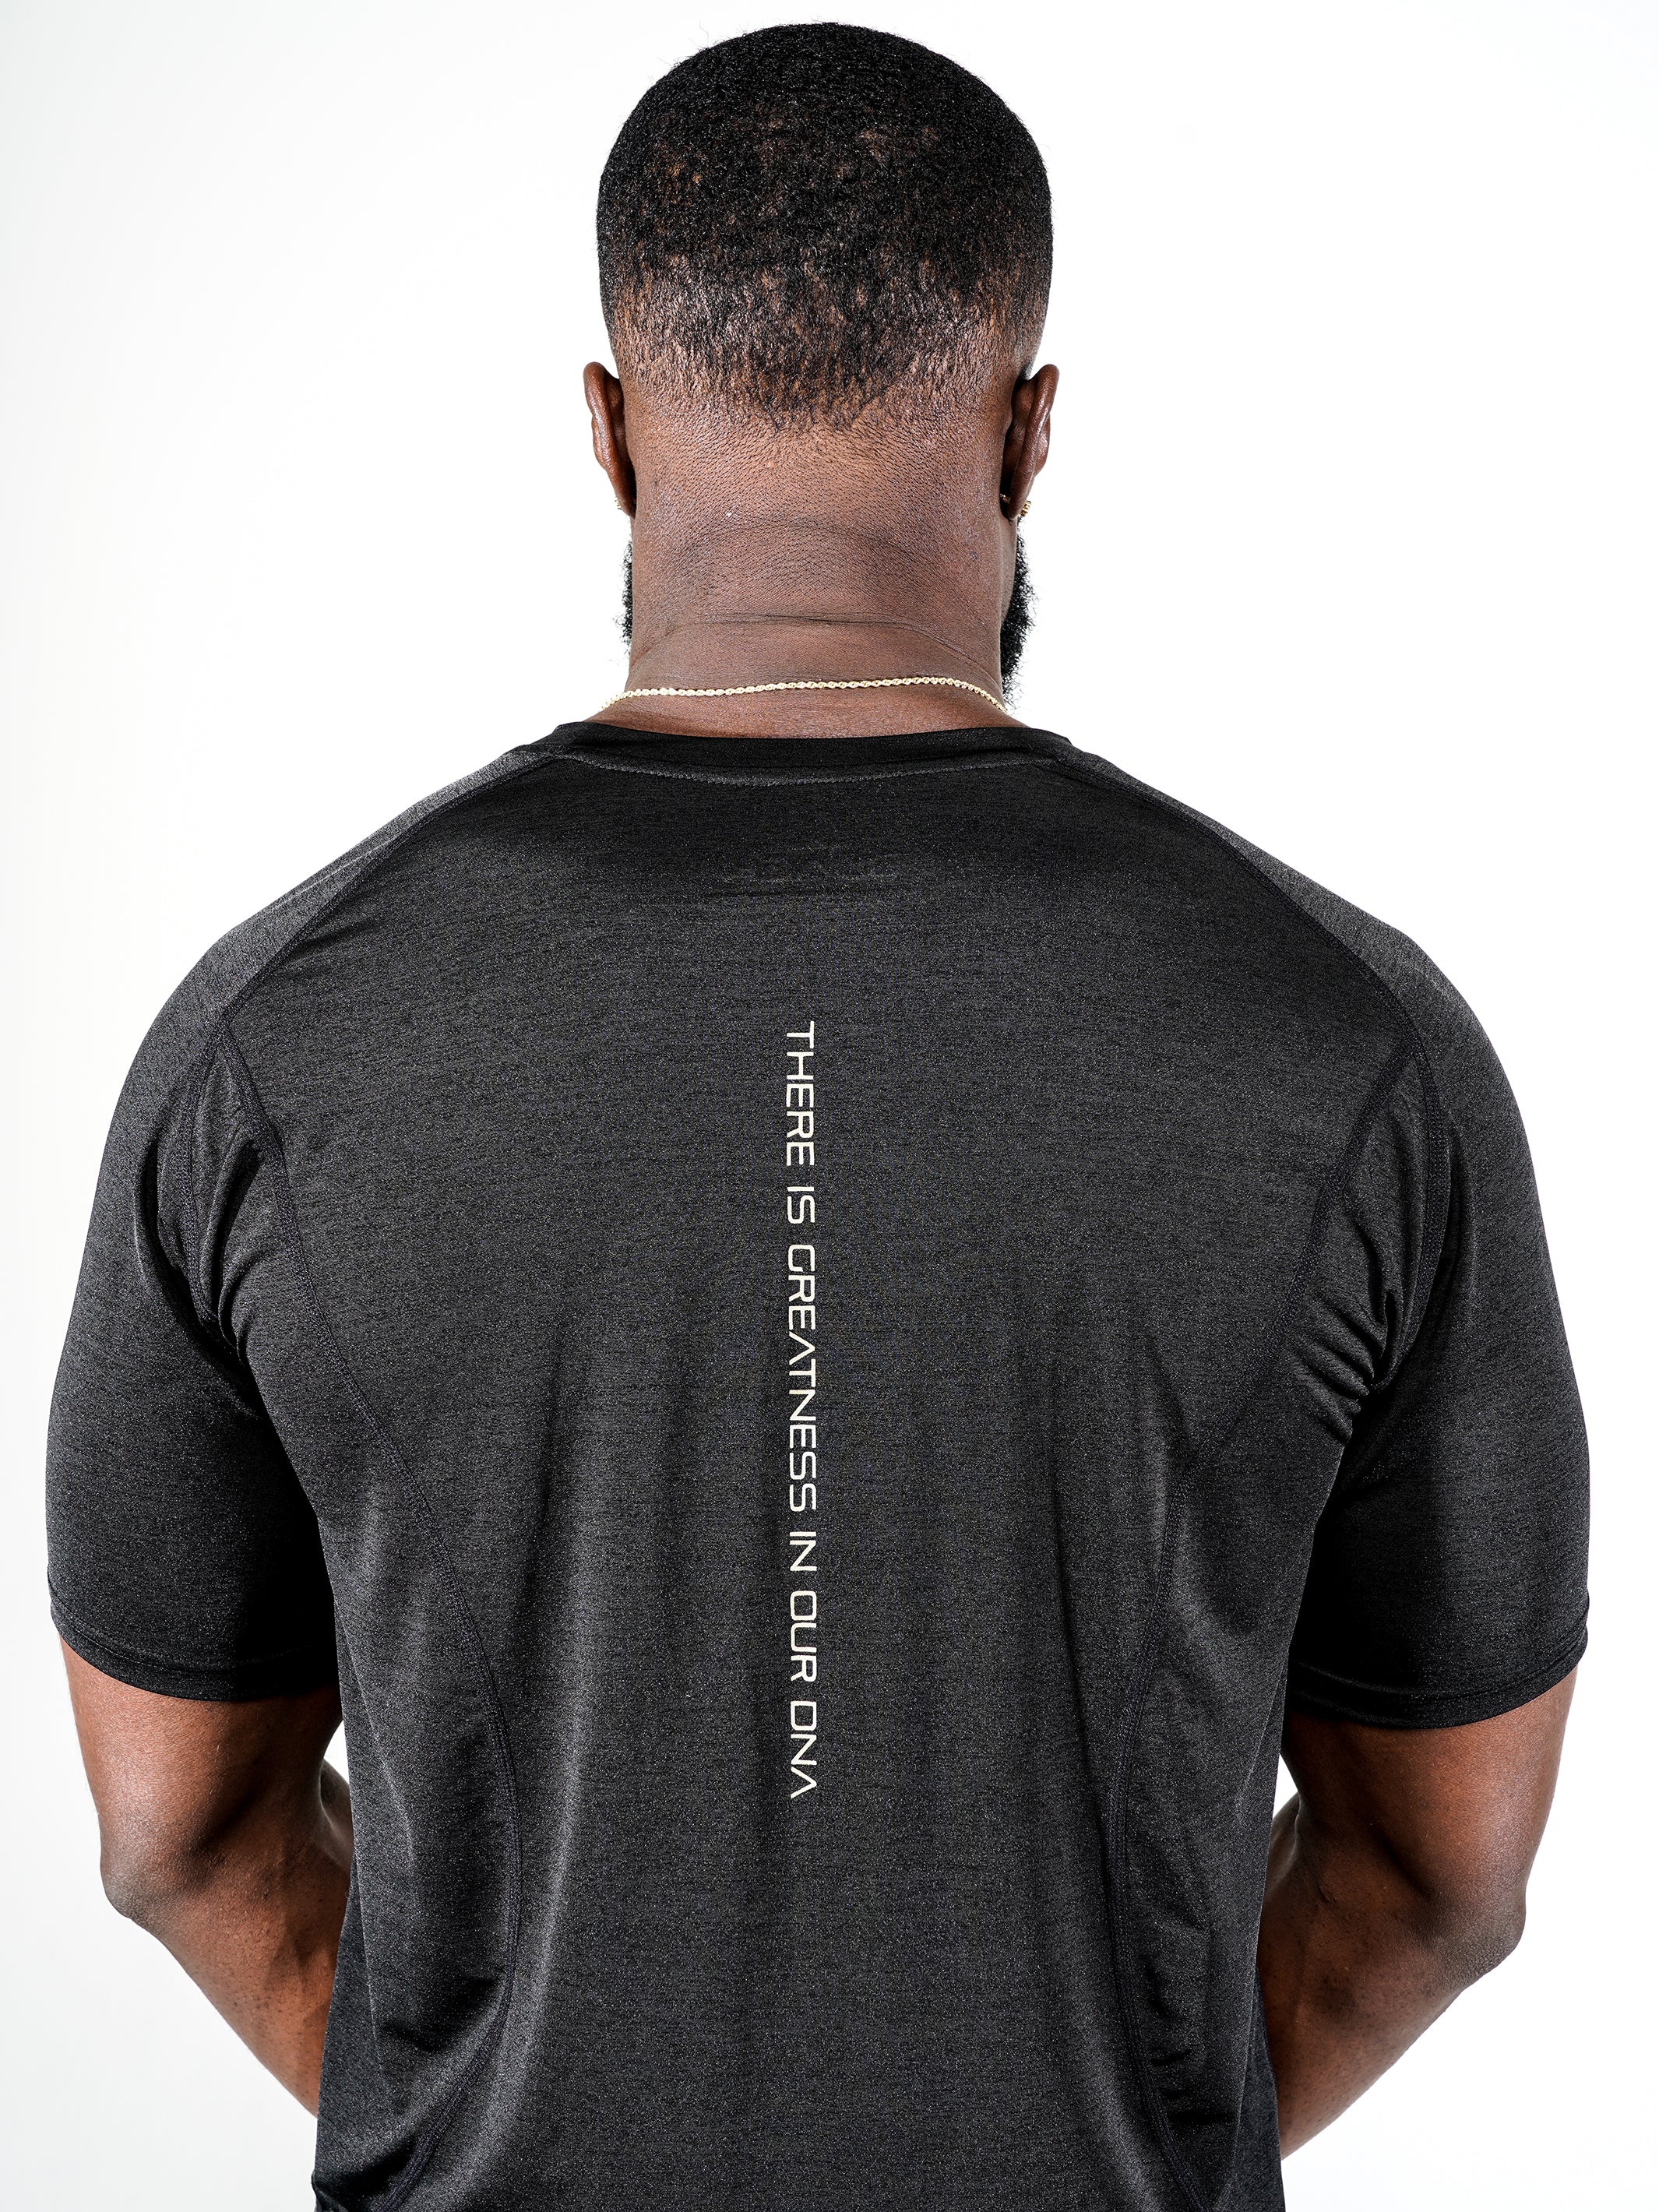 Men's Black Marble Performance Shirt